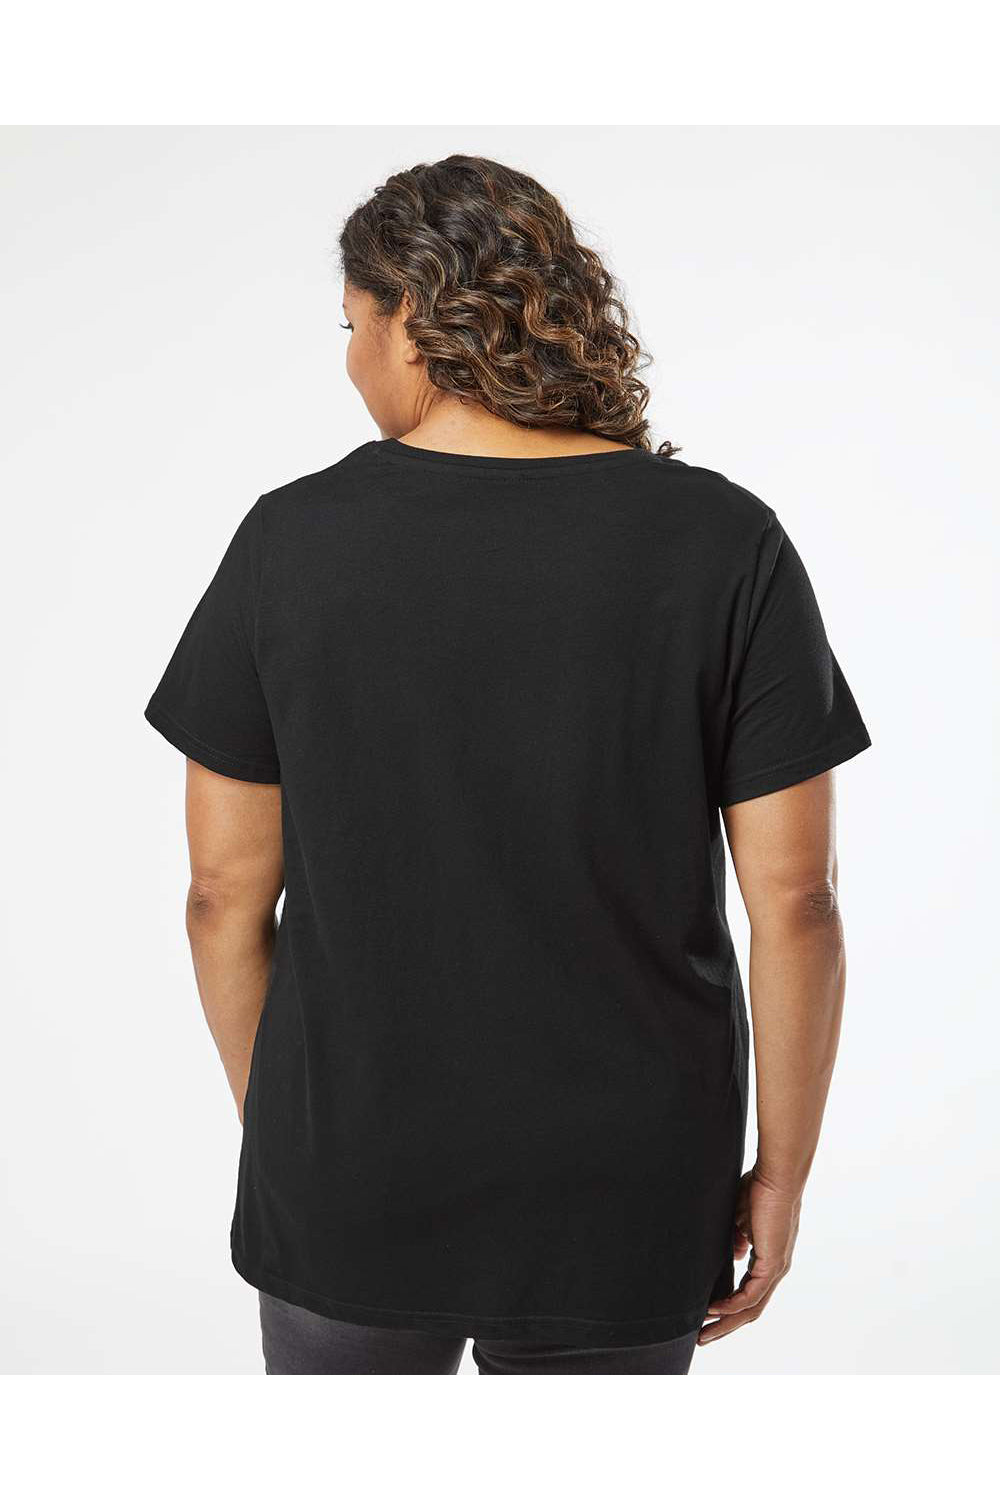 LAT 3816 Womens Curvy Collection Fine Jersey Short Sleeve Crewneck T-Shirt Blended Black Model Back